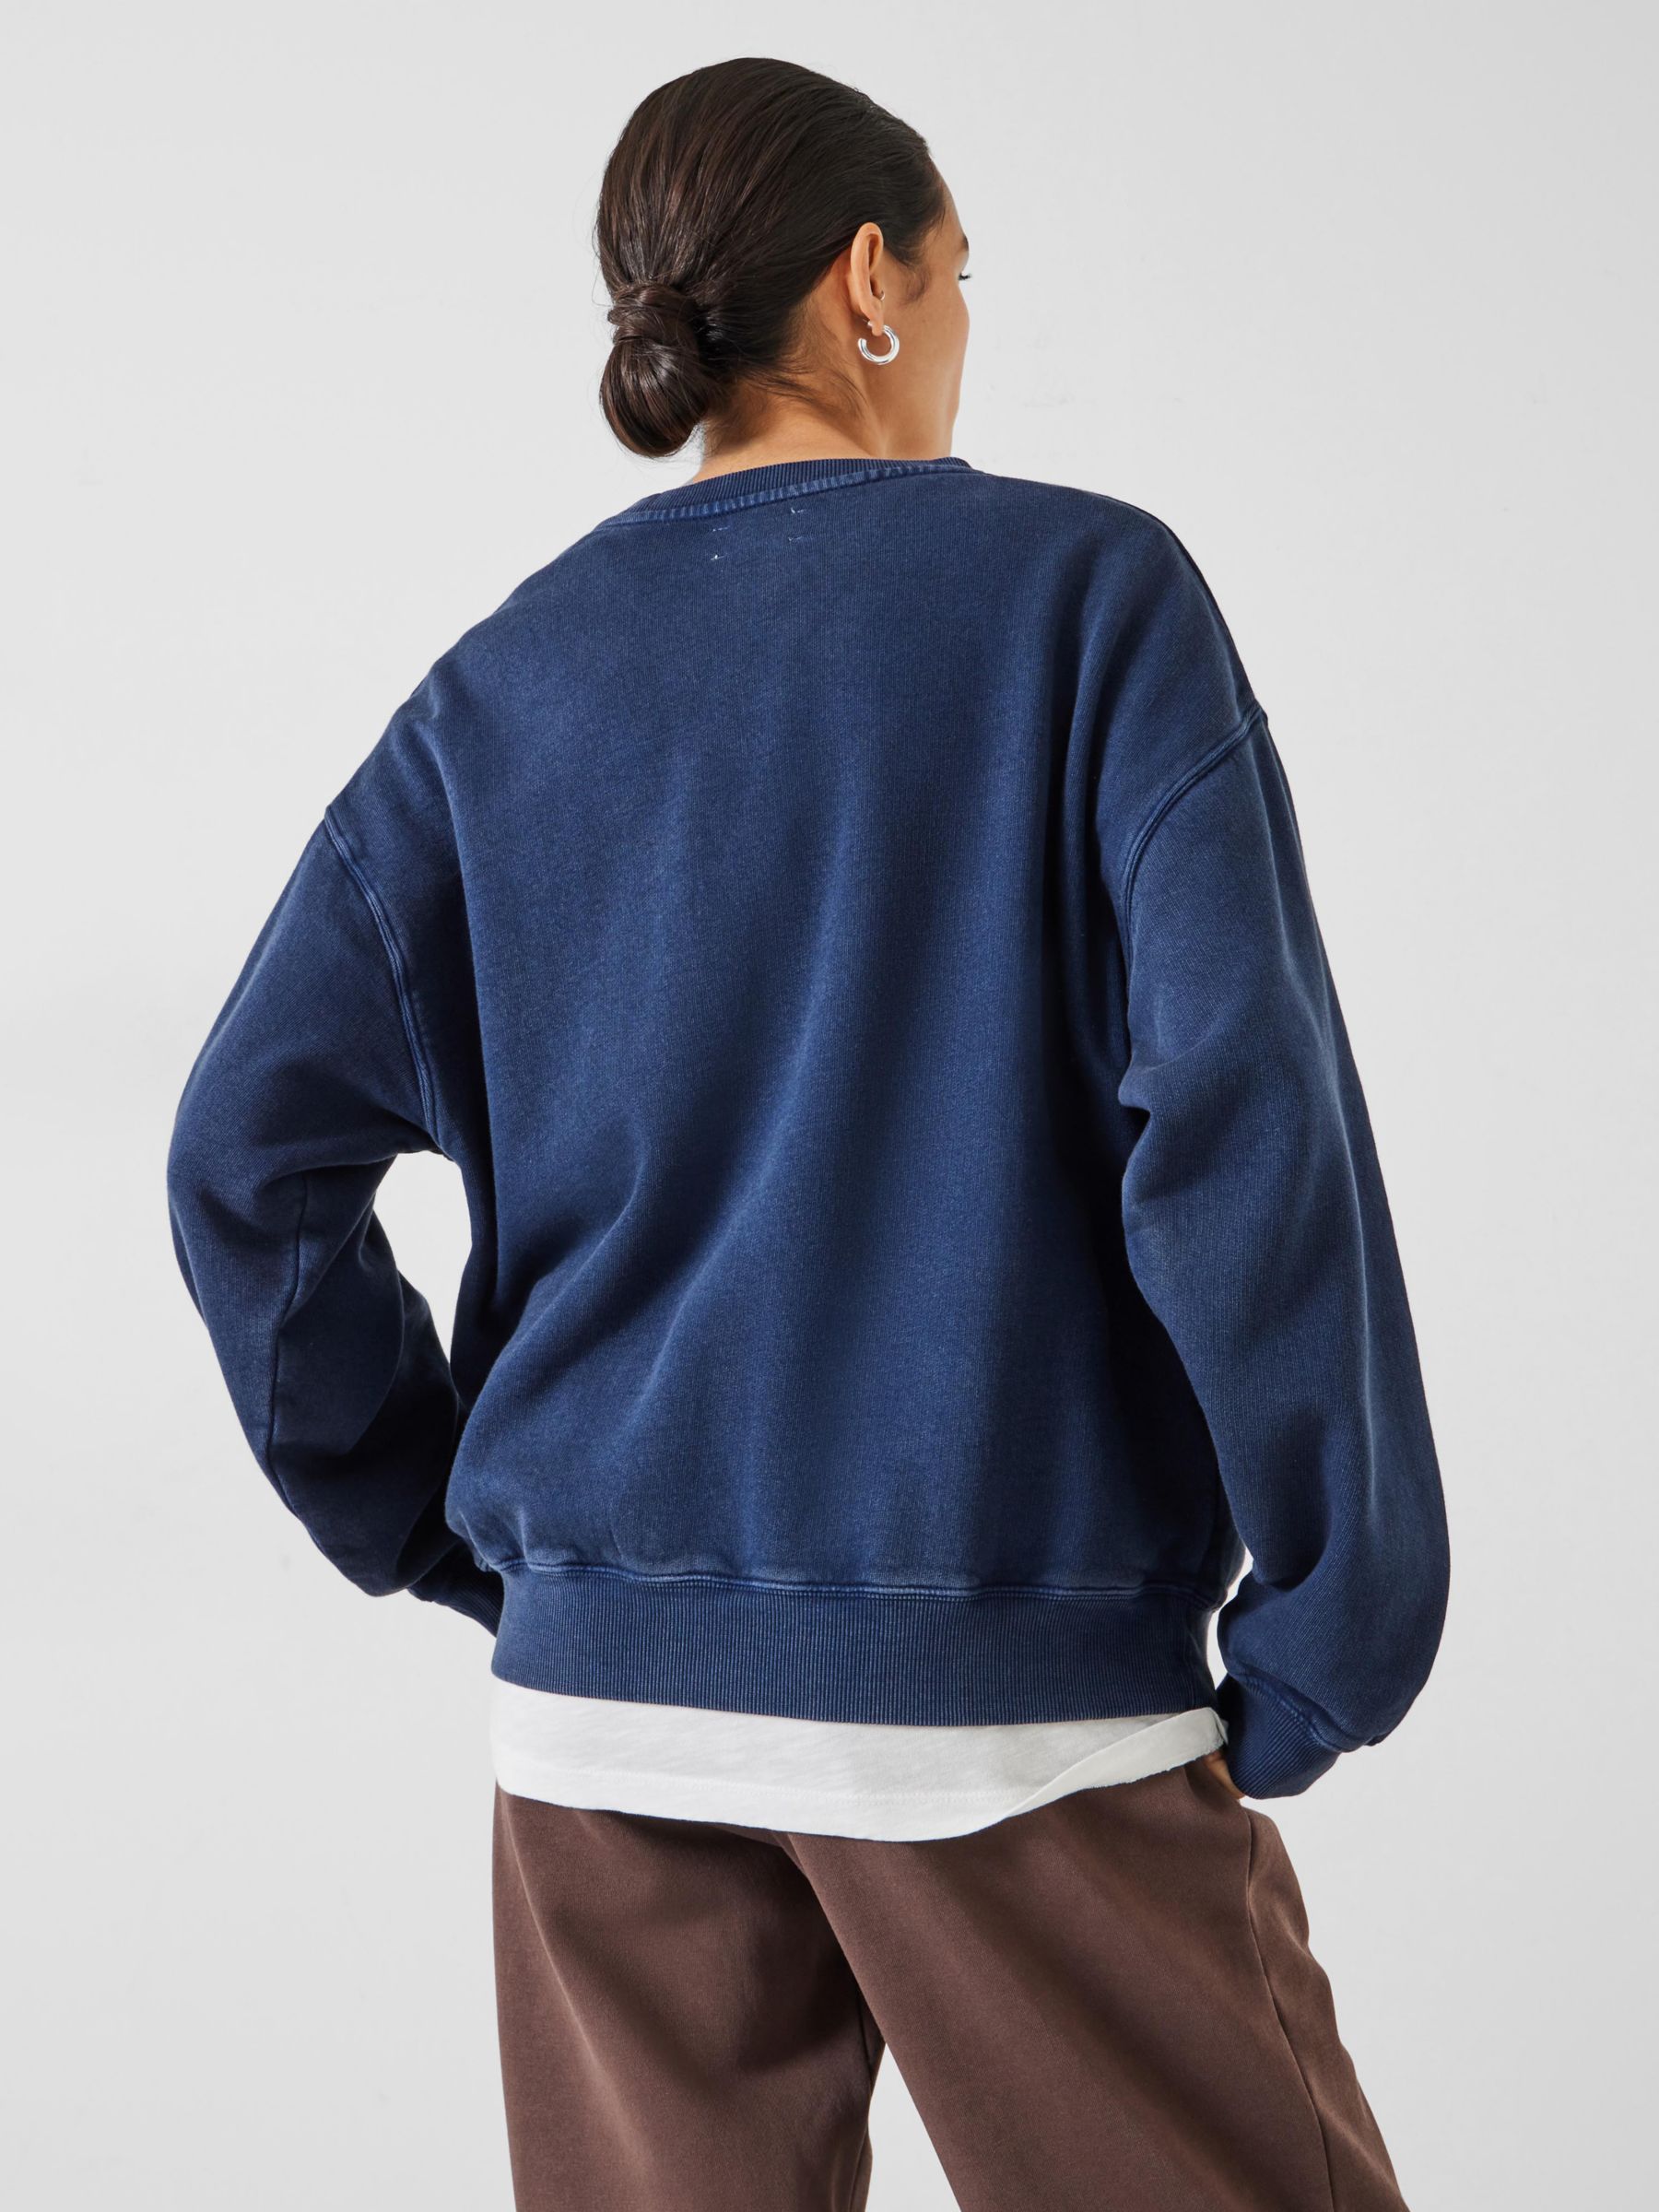 HUSH Off-Piste Graphic Sweatshirt, Dark Navy at John Lewis & Partners